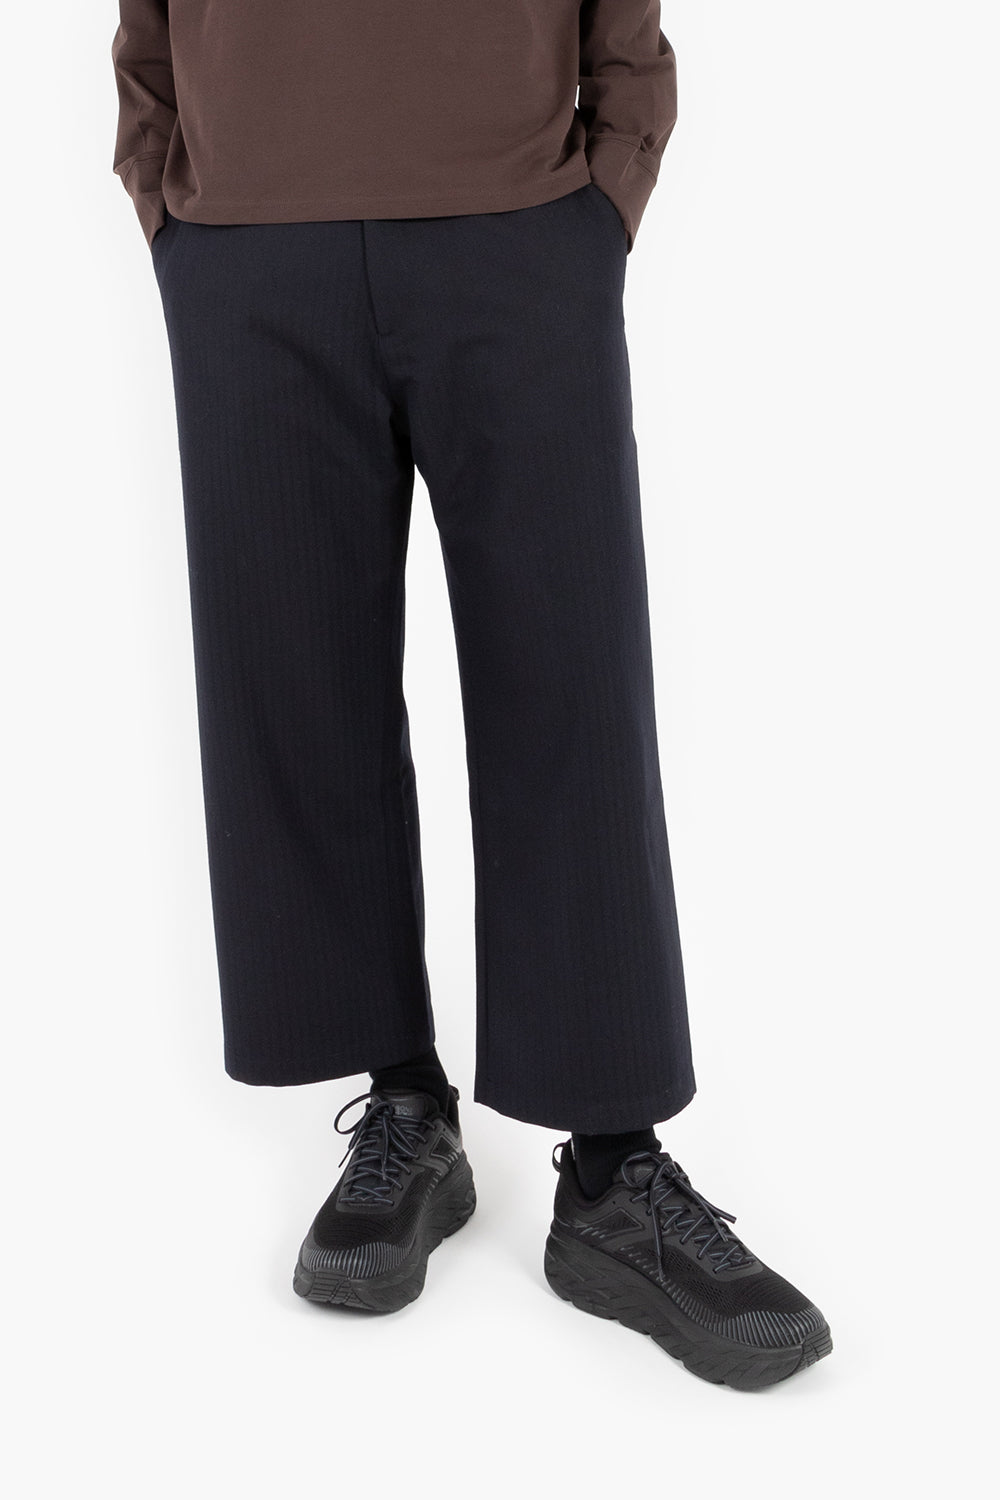 Gianni Feraud skinny fit suit pants in herringbone black and white | ASOS